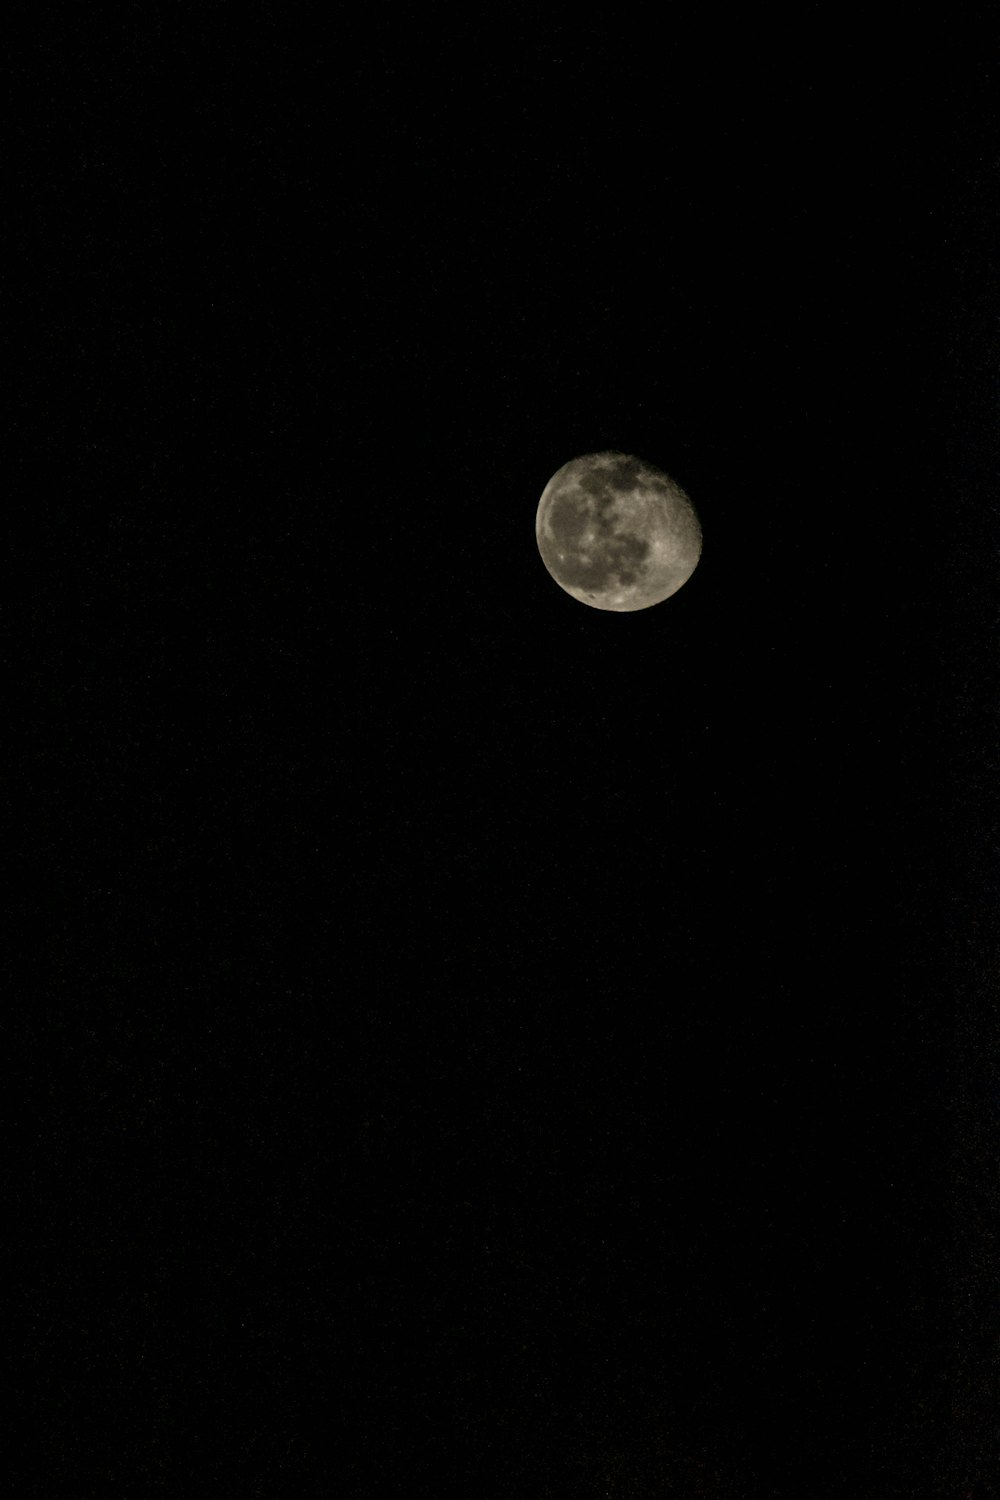 Full moon in dark night sky photo – Free Moon Image on Unsplash